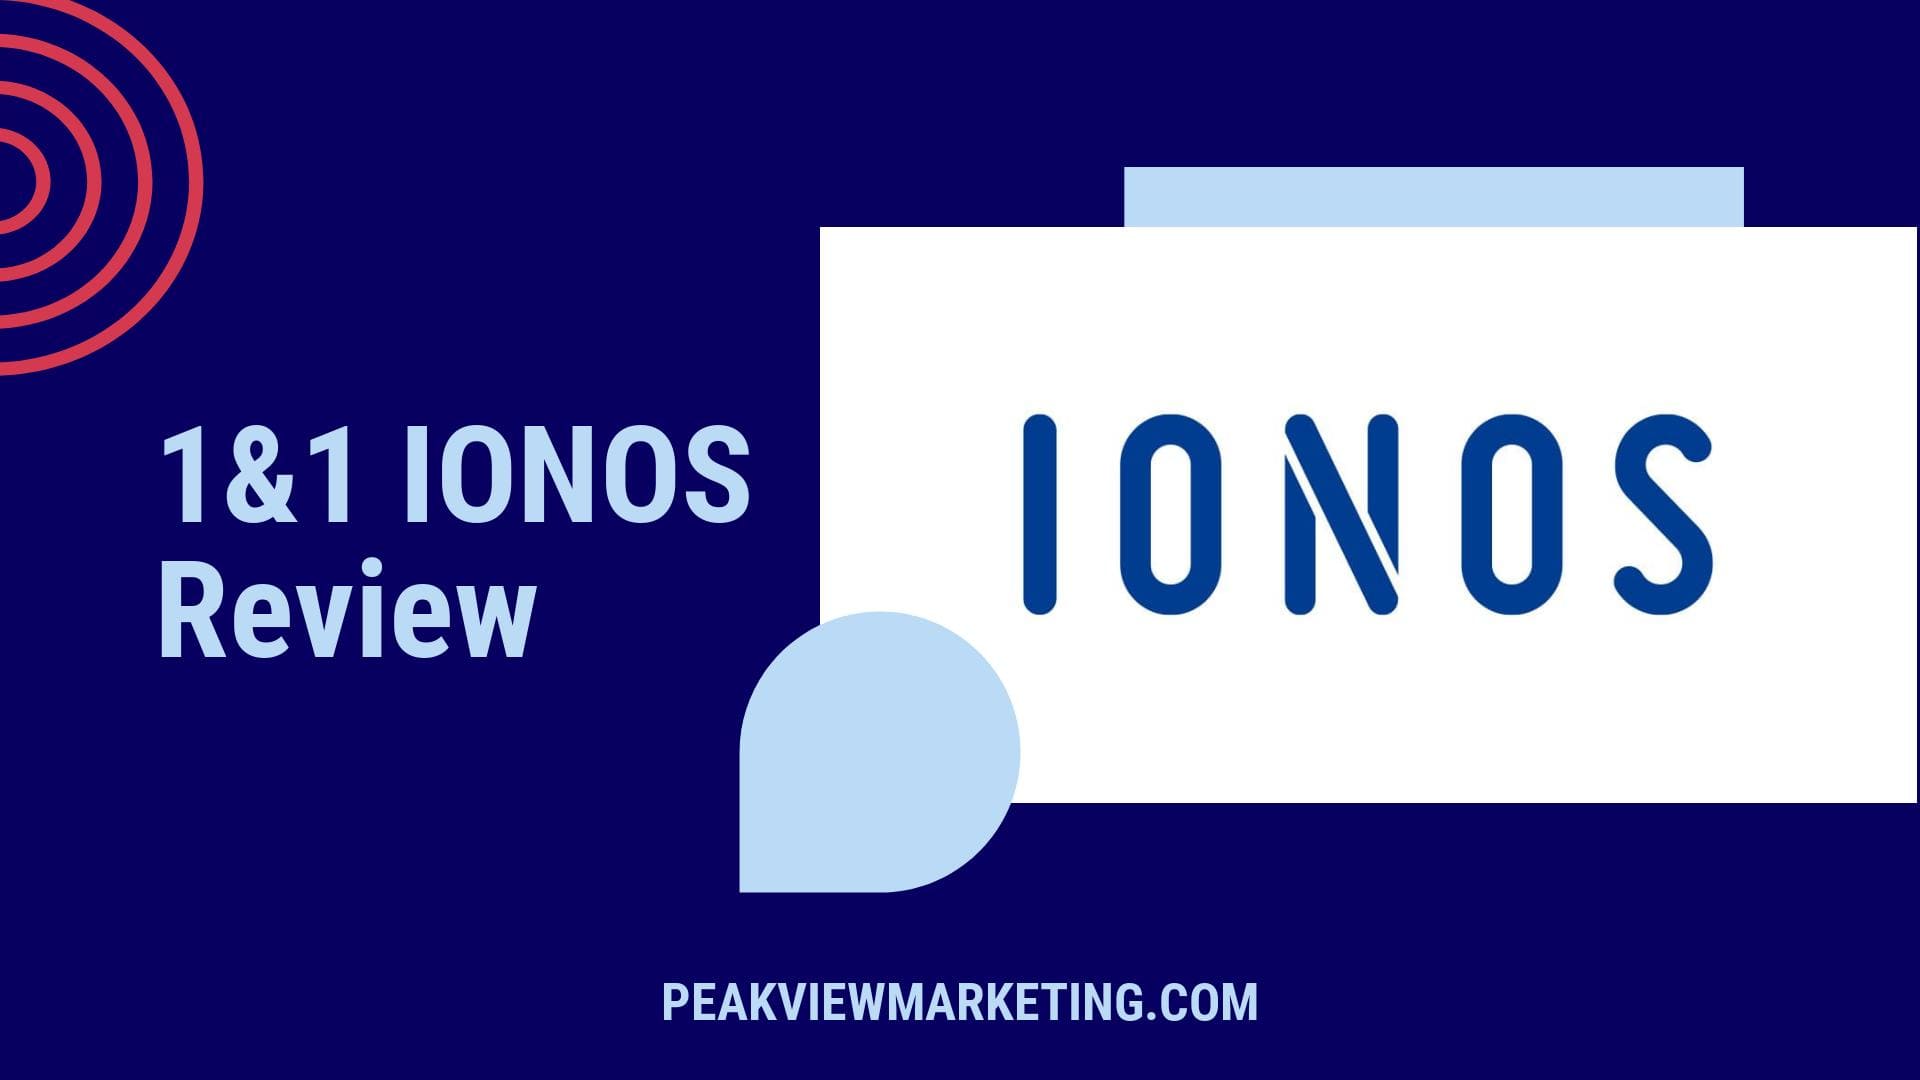 1&1 IONOS Review Image